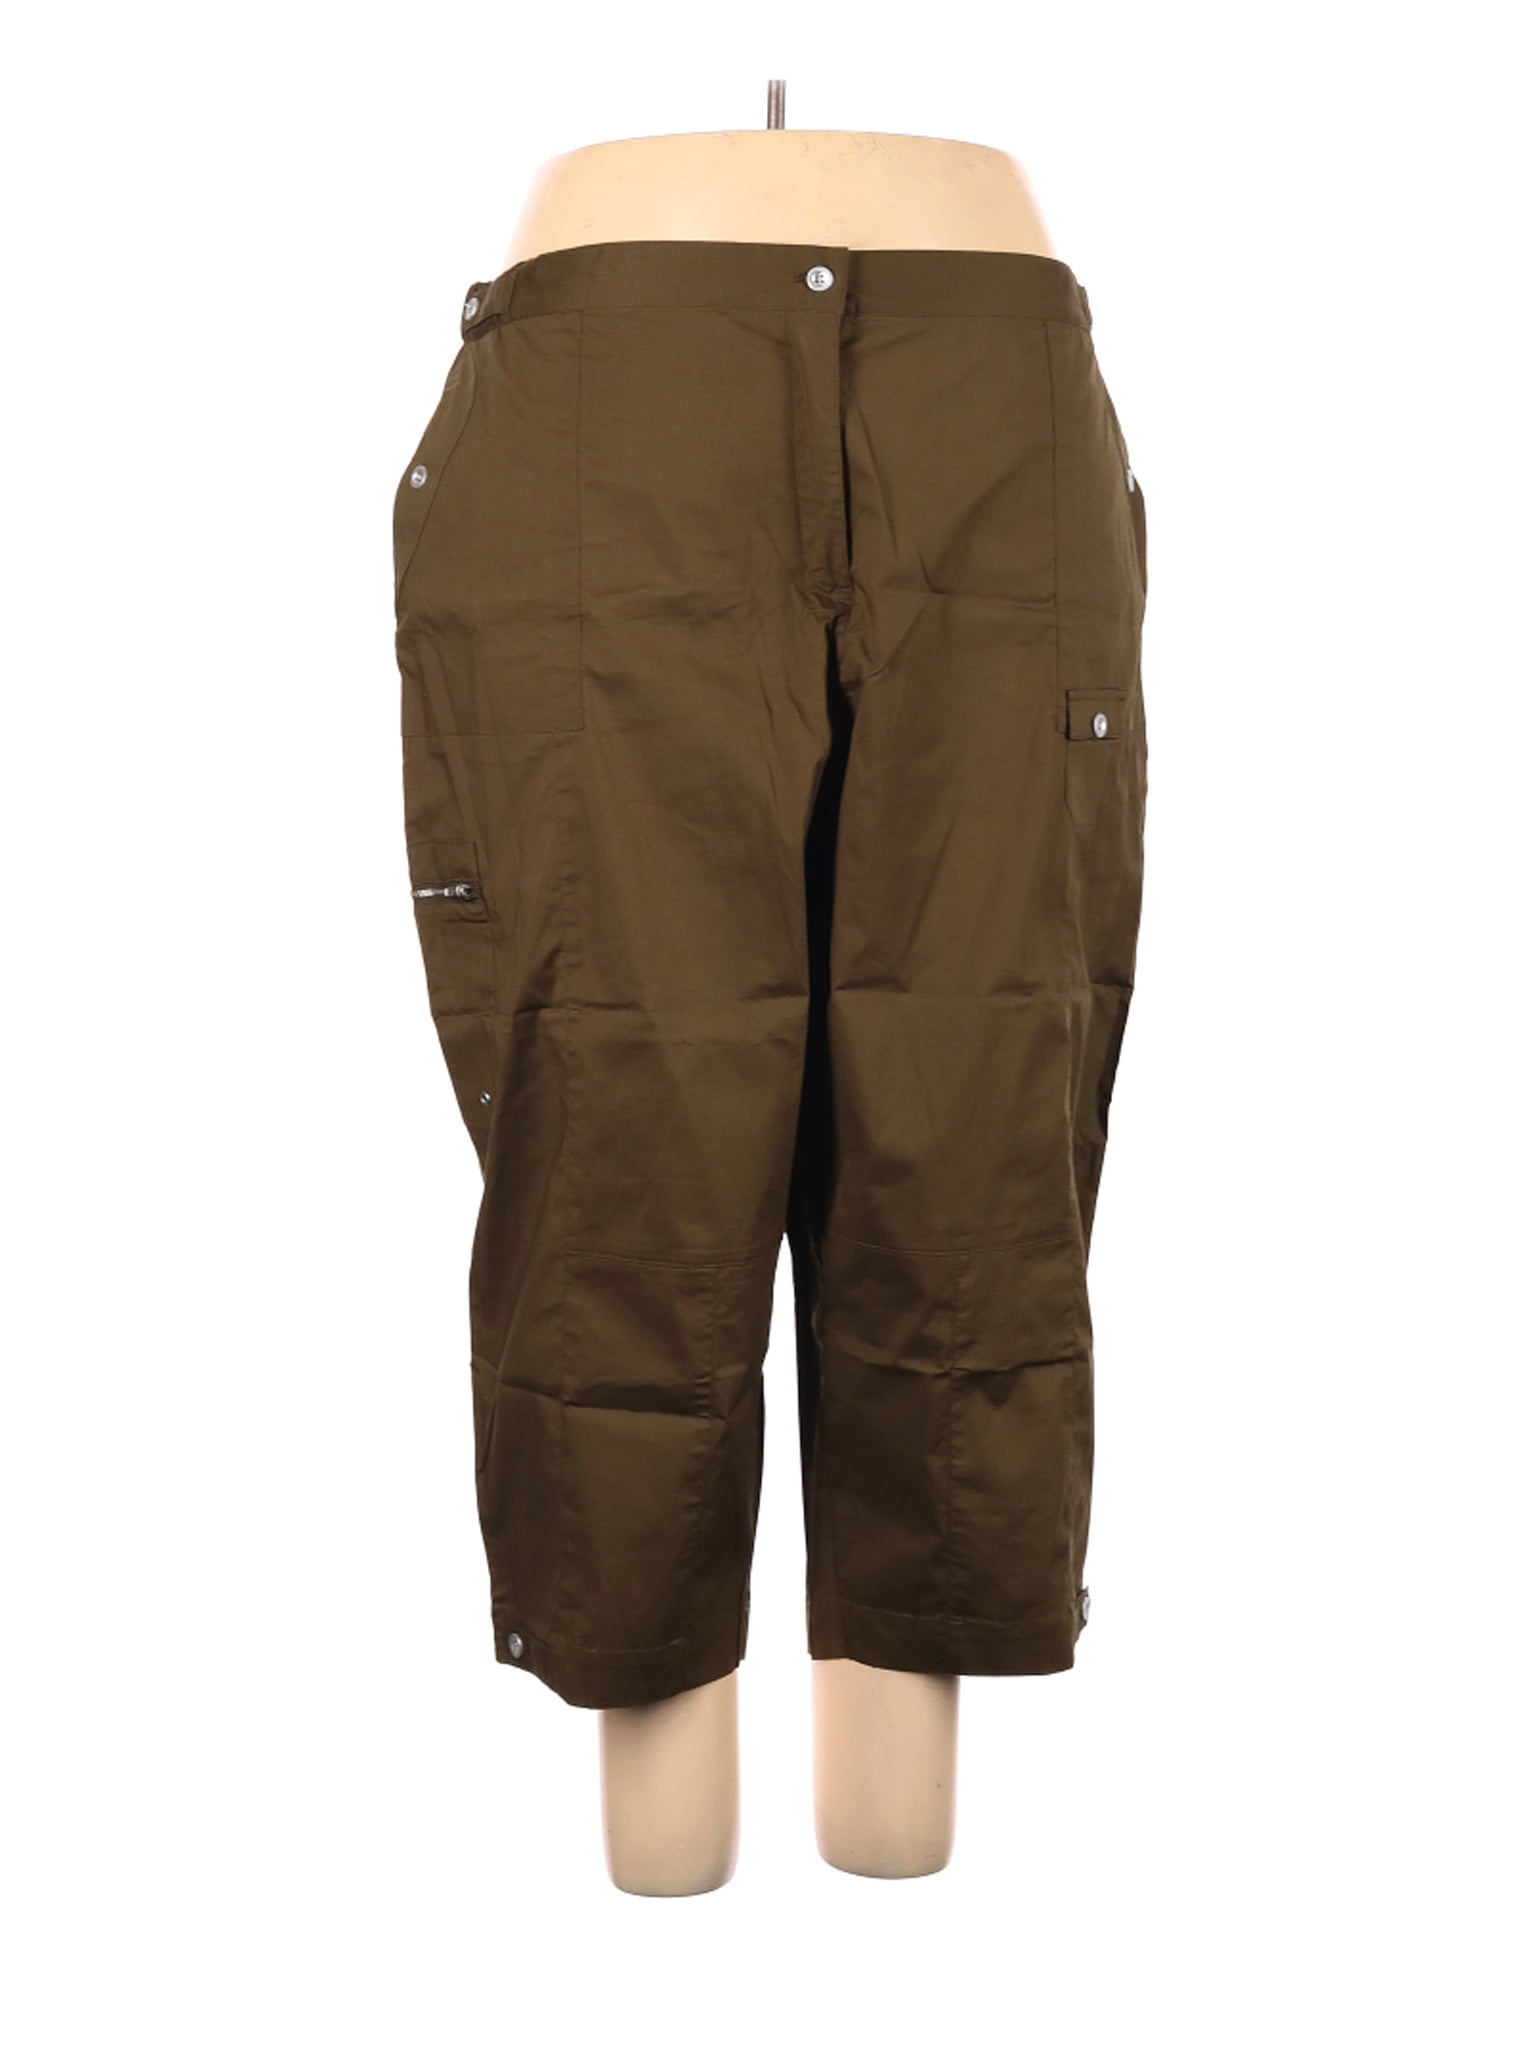 size 24 cargo pants